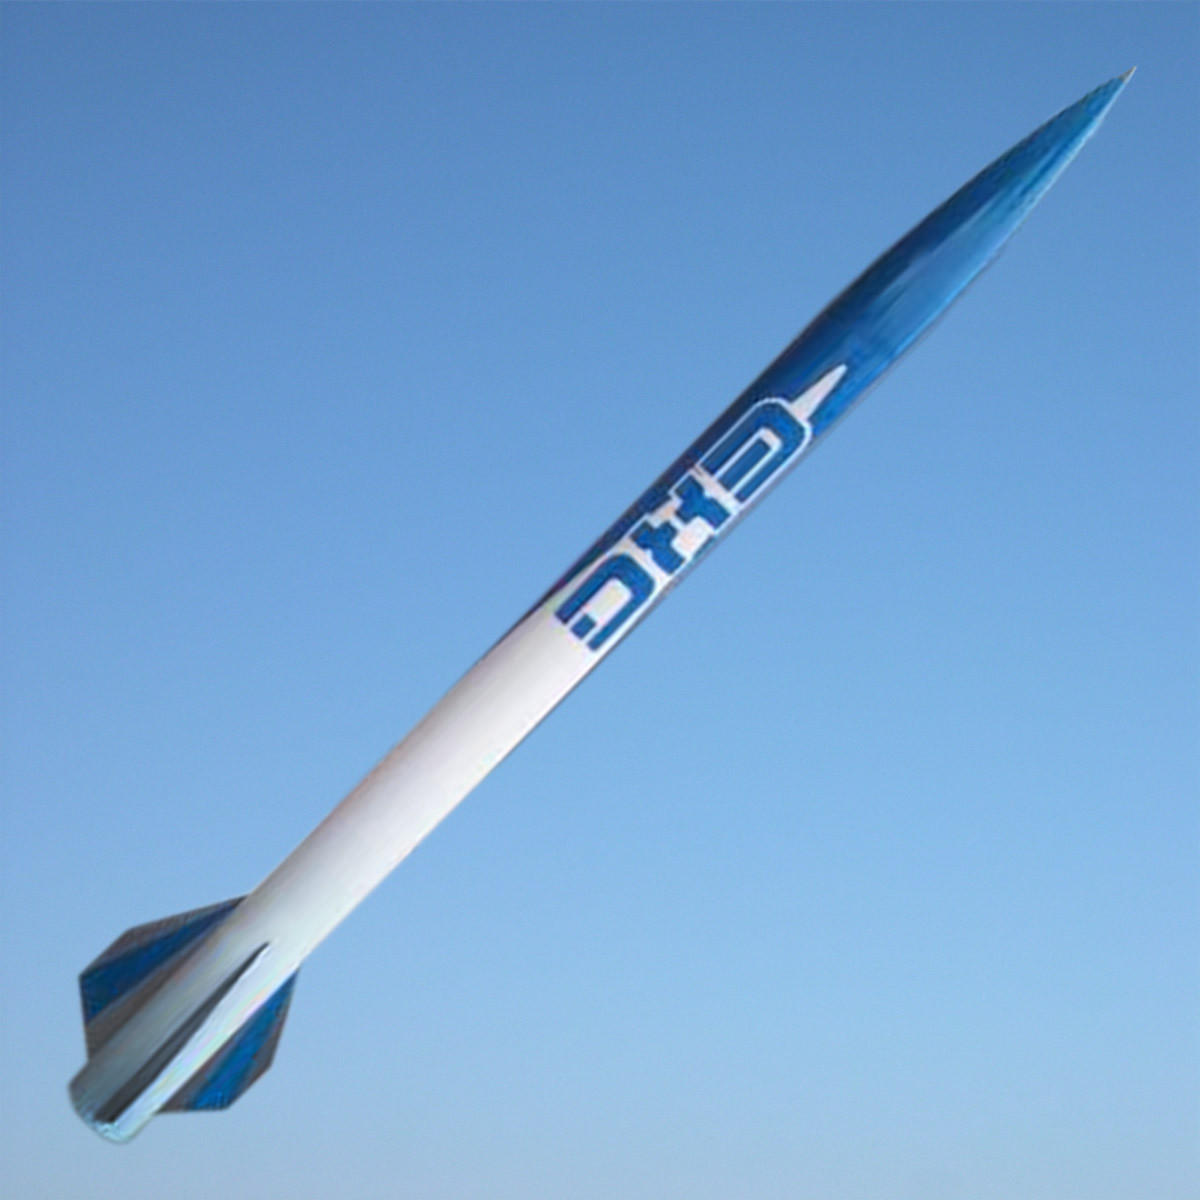 Madcow Rocketry 2.6 Fiberglass Dual Deploy DX3 Rocket Kit 54mm 